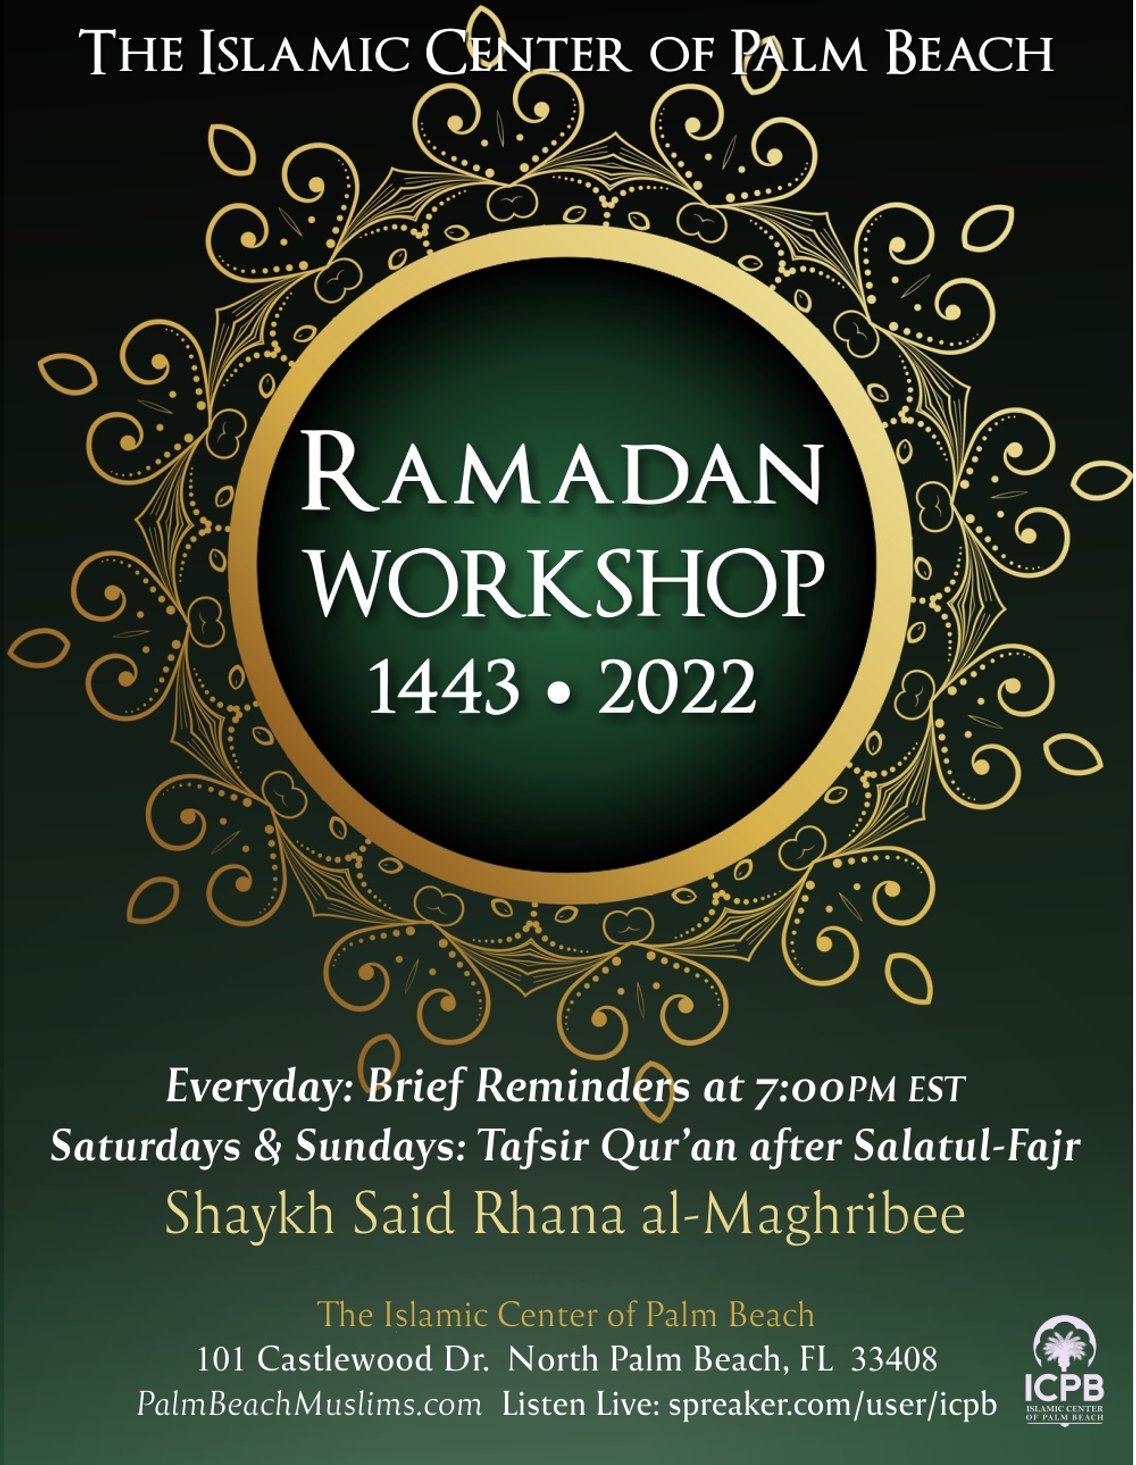 01 Ramadan Workshop 1433 - 2022 - Cover Image